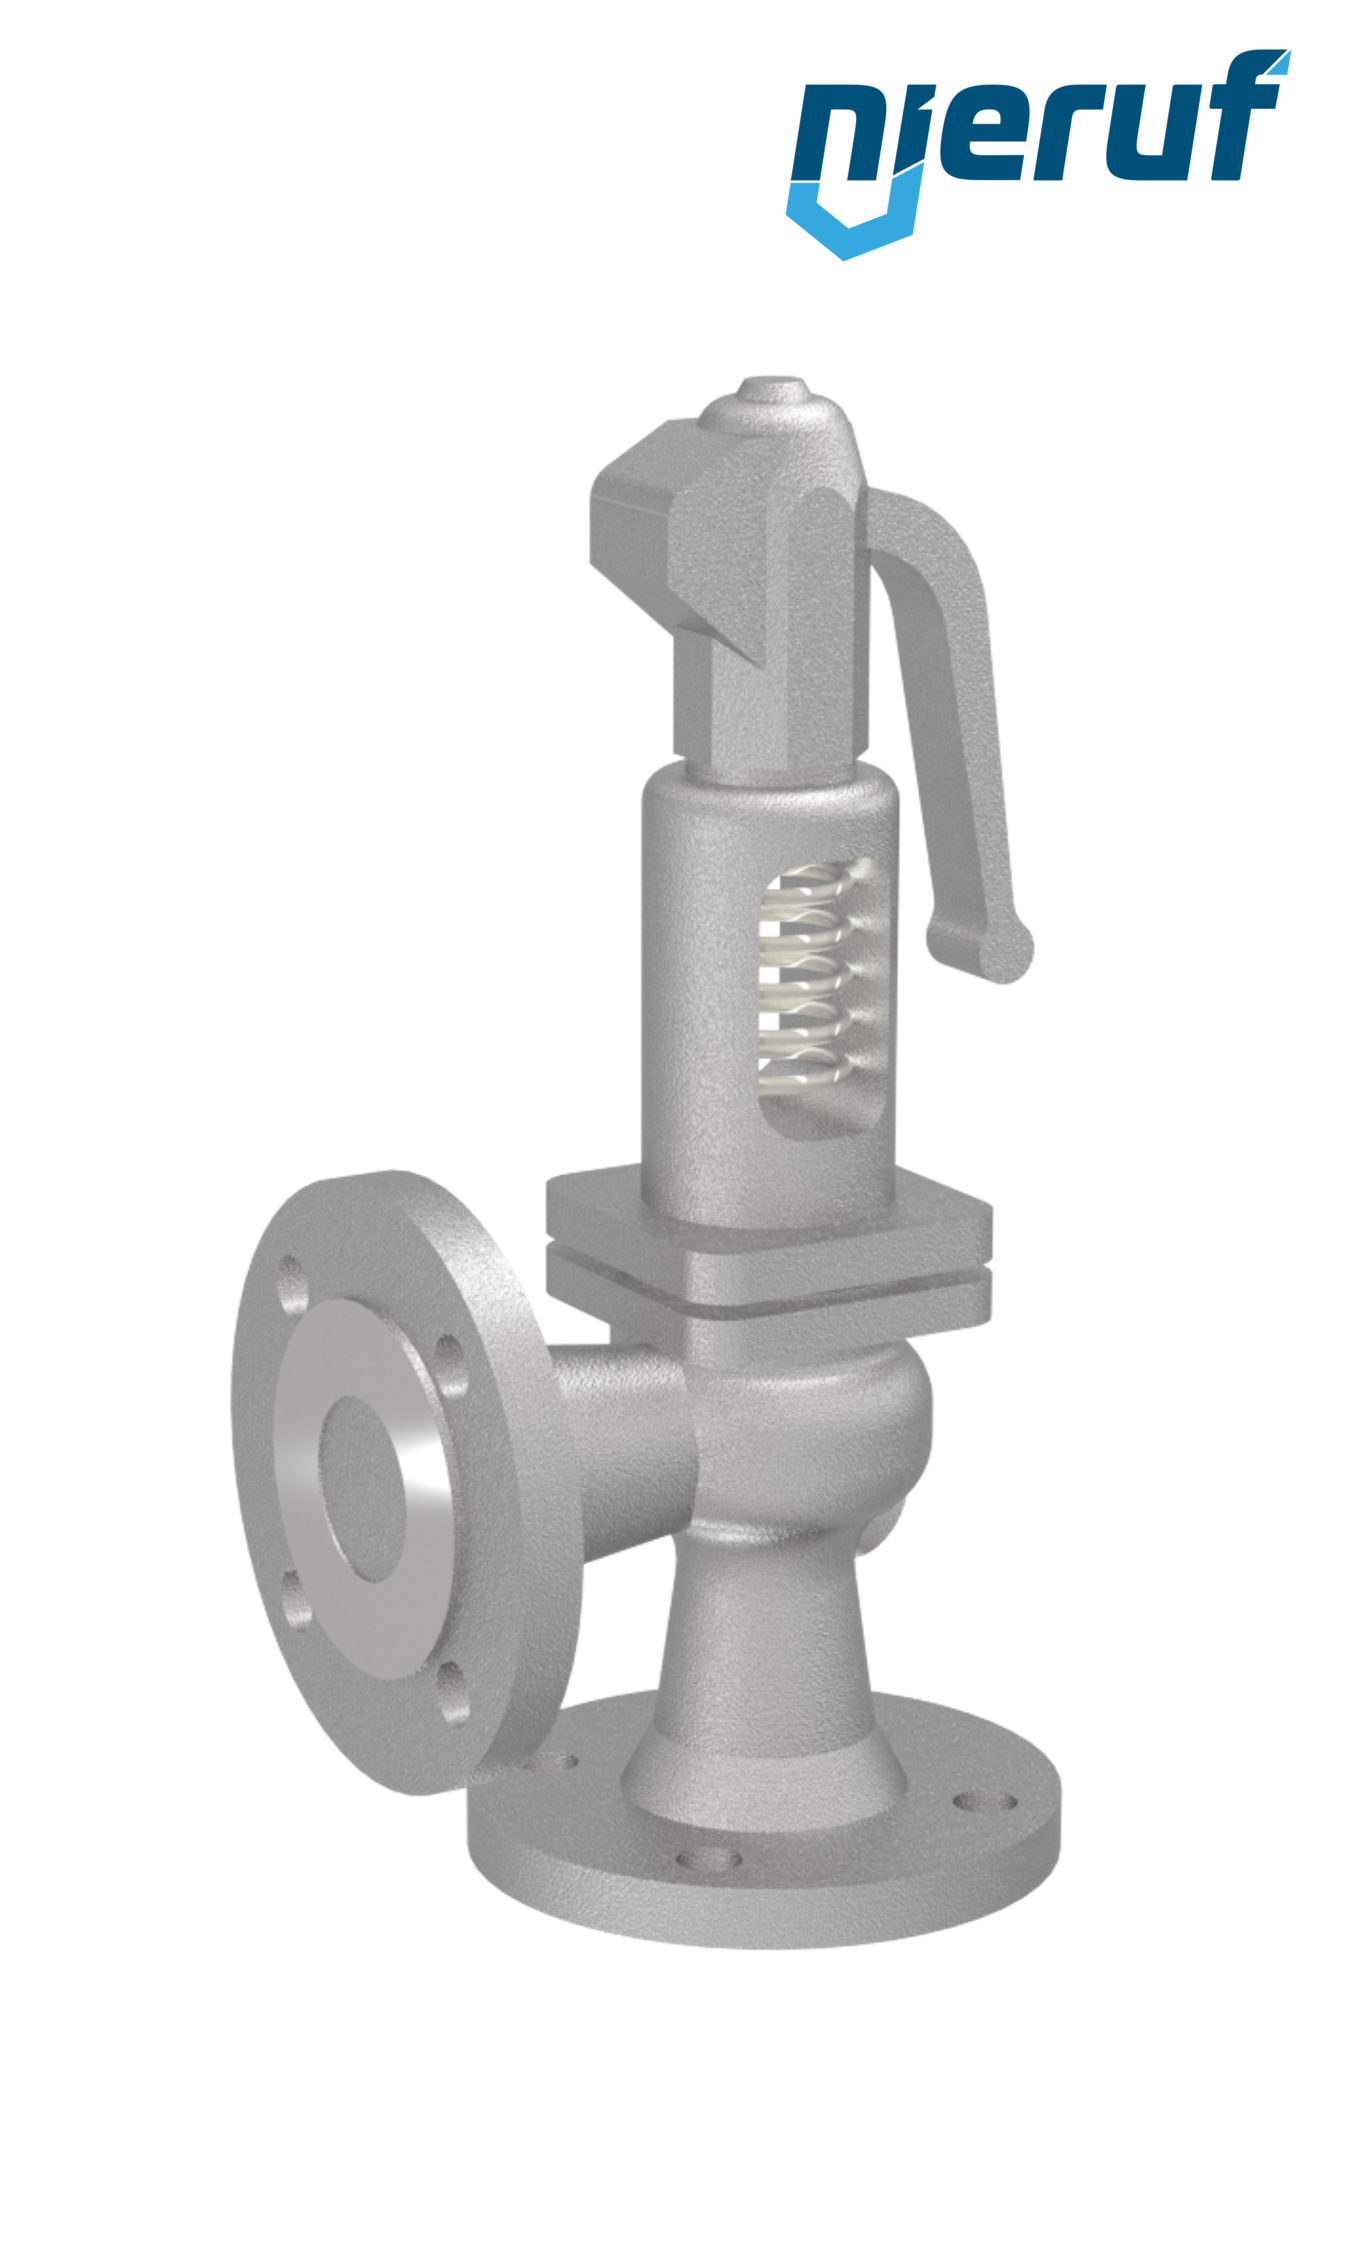 flange-safety valve DN80/DN80 SF0102, cast iron EN-JL1040 EPDM, with lever